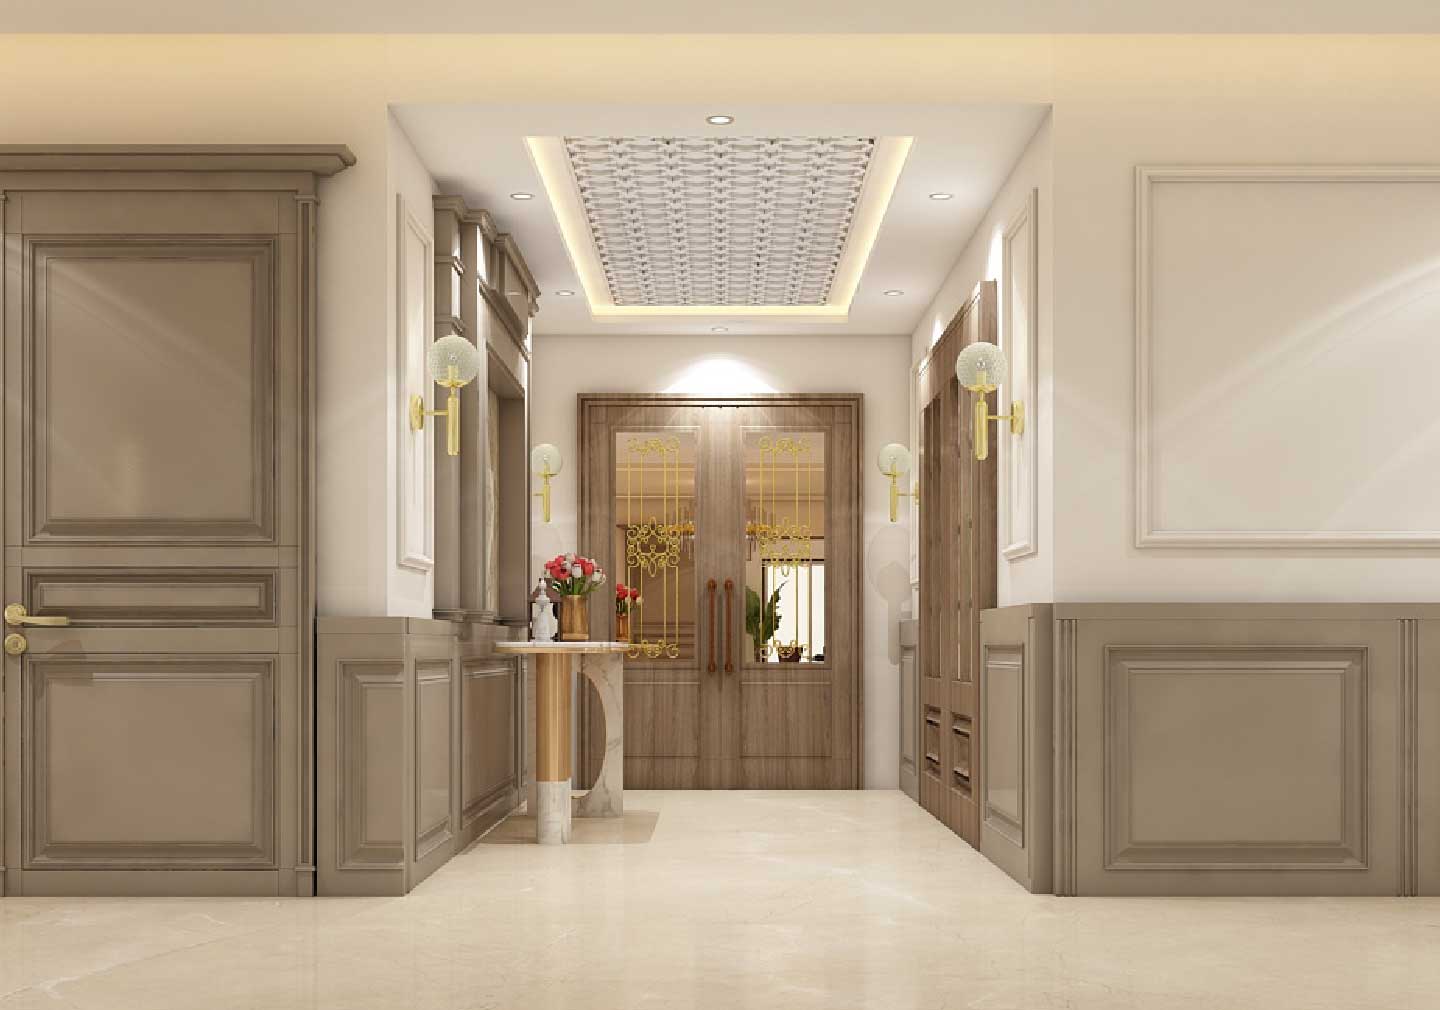 The Key Elements of Grand Foyer Design 